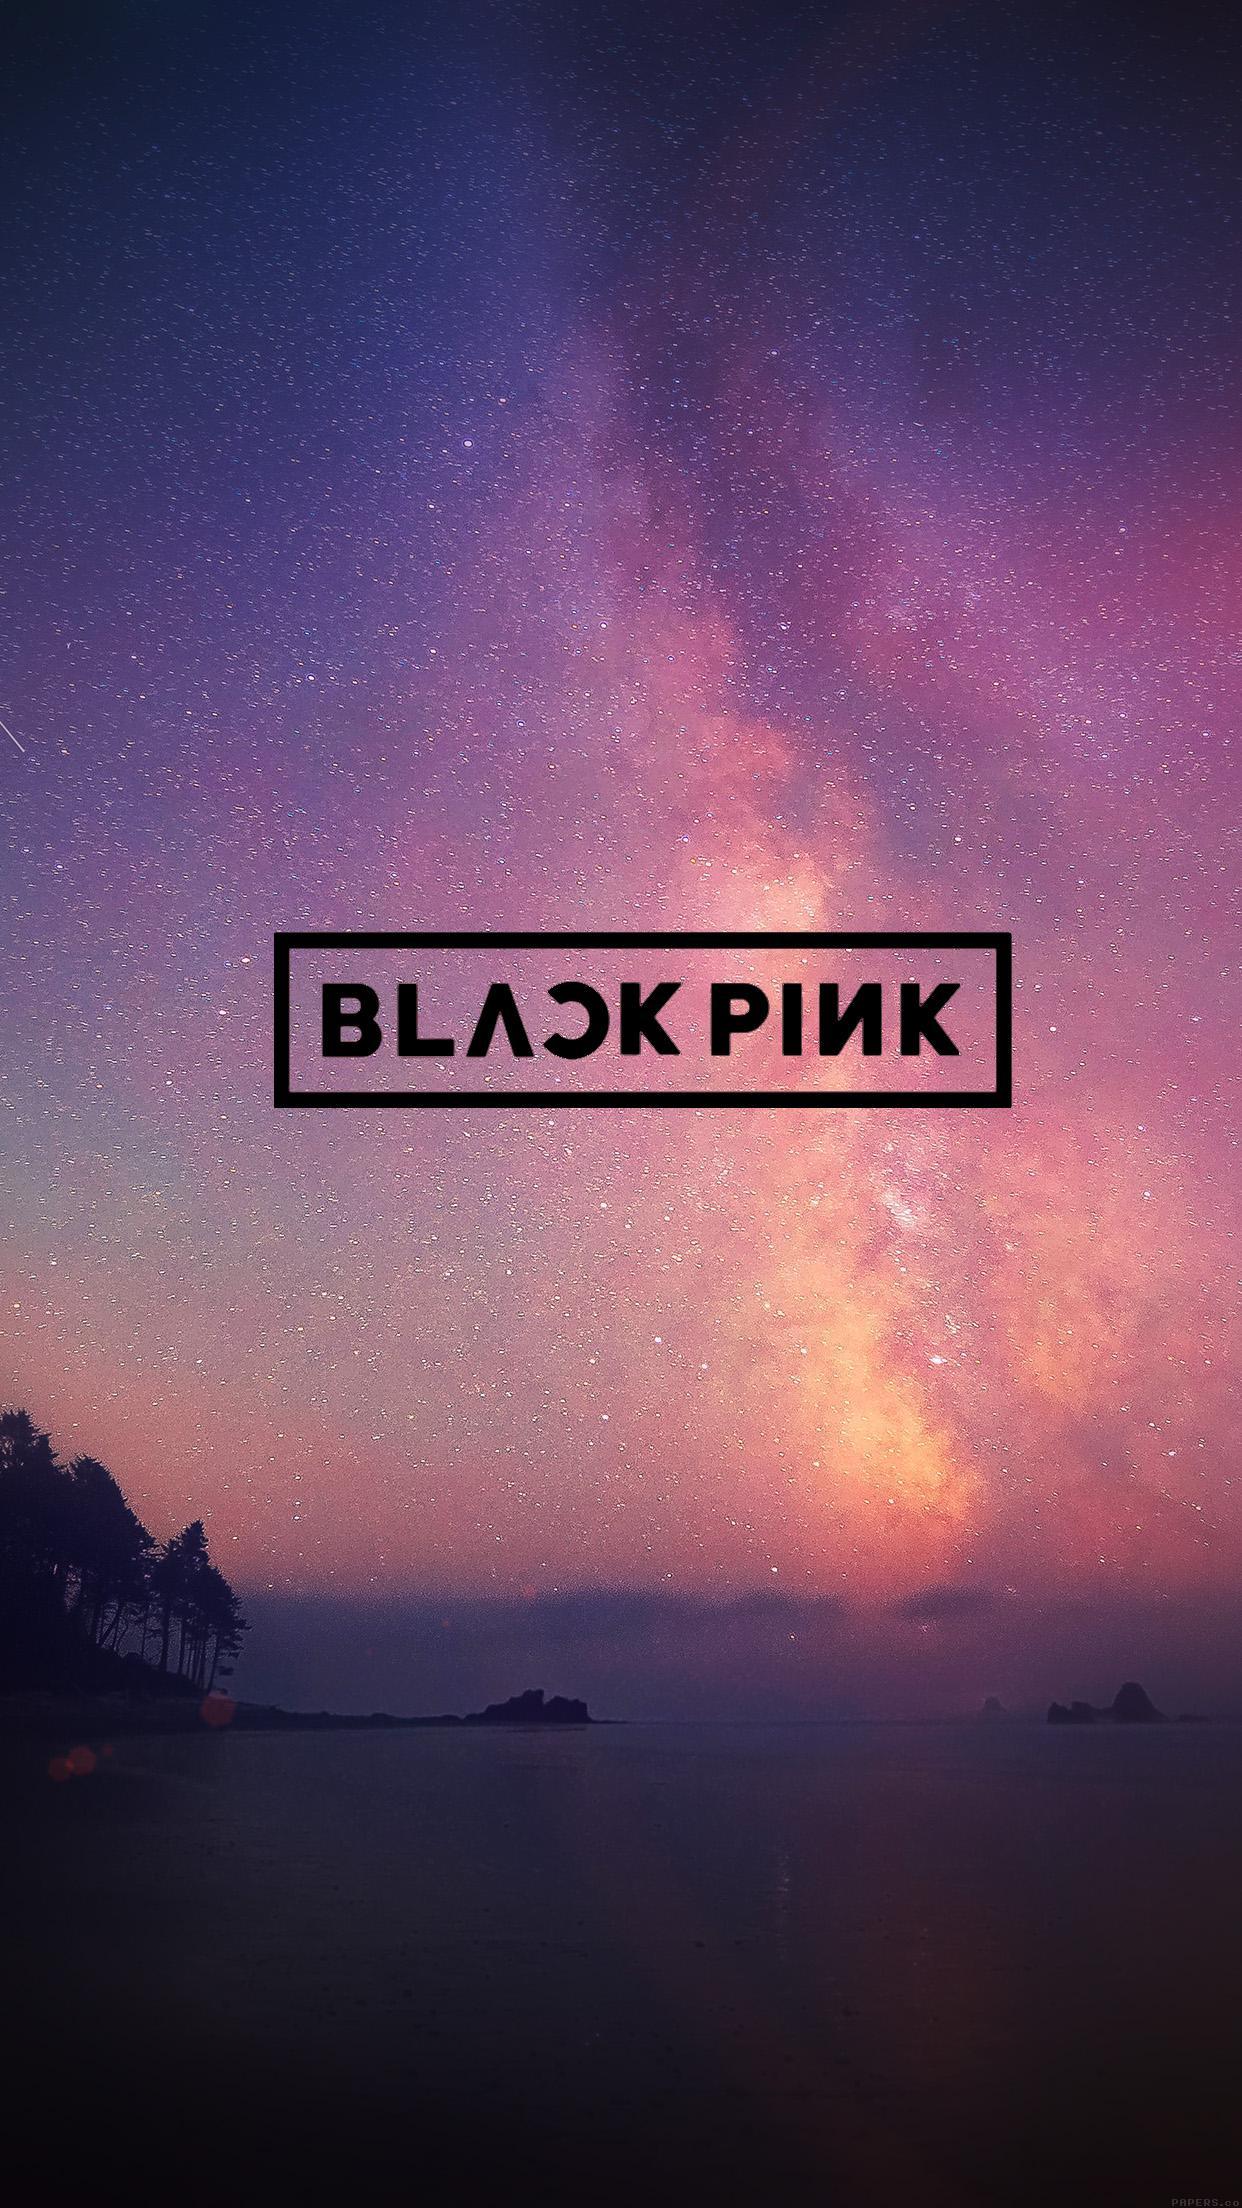 BlackPink Logo Phone Wallpaper